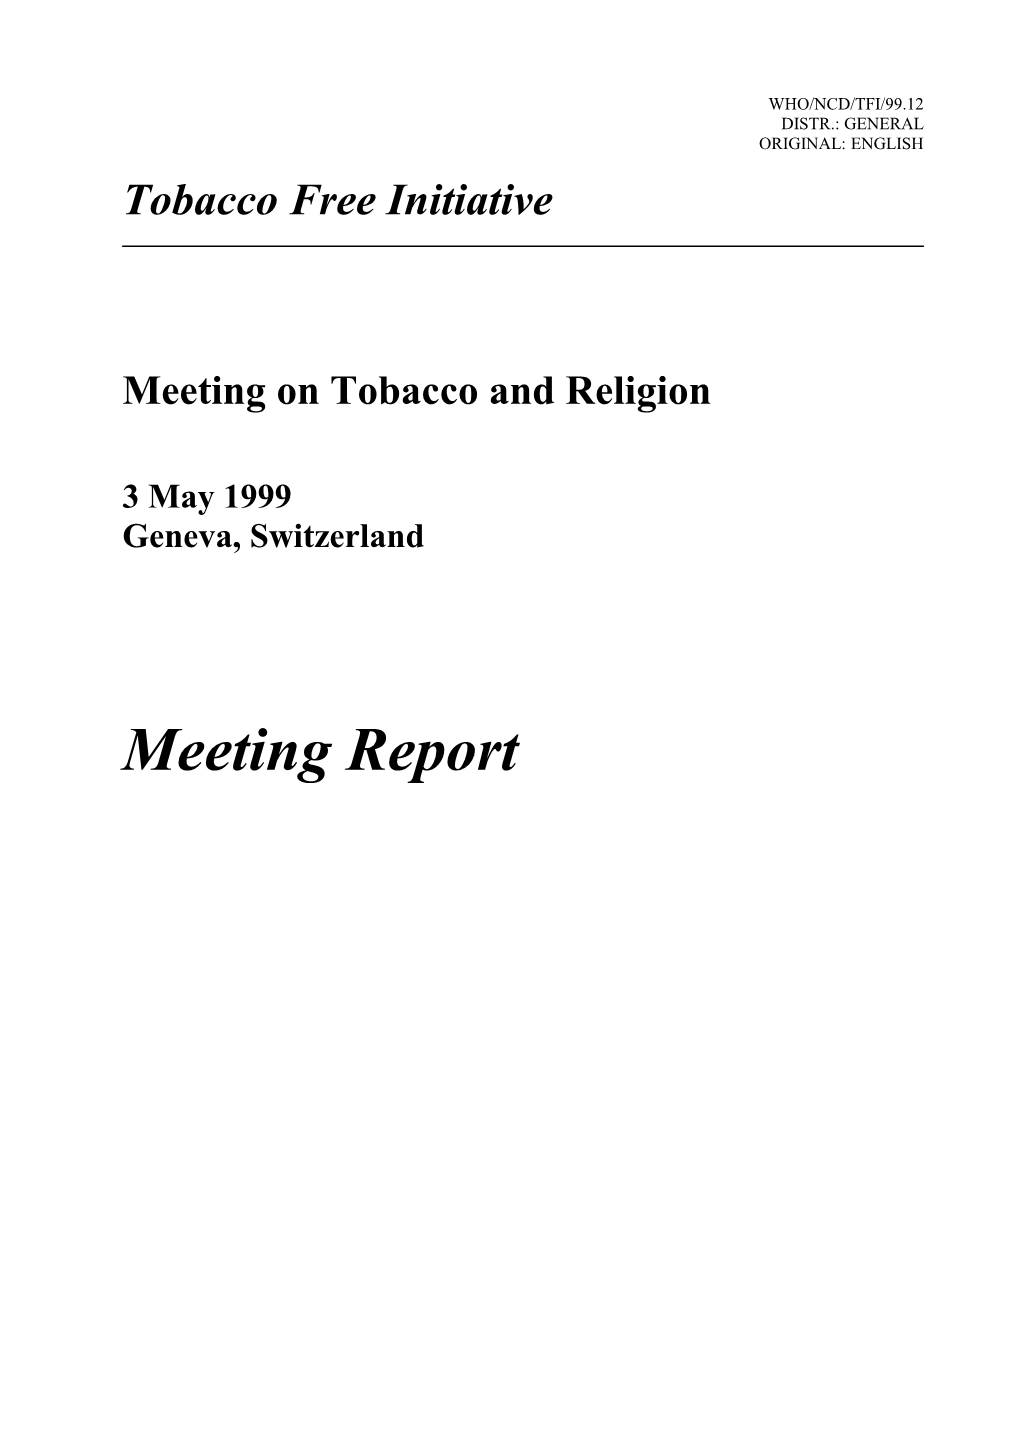 Tobacco and Religion